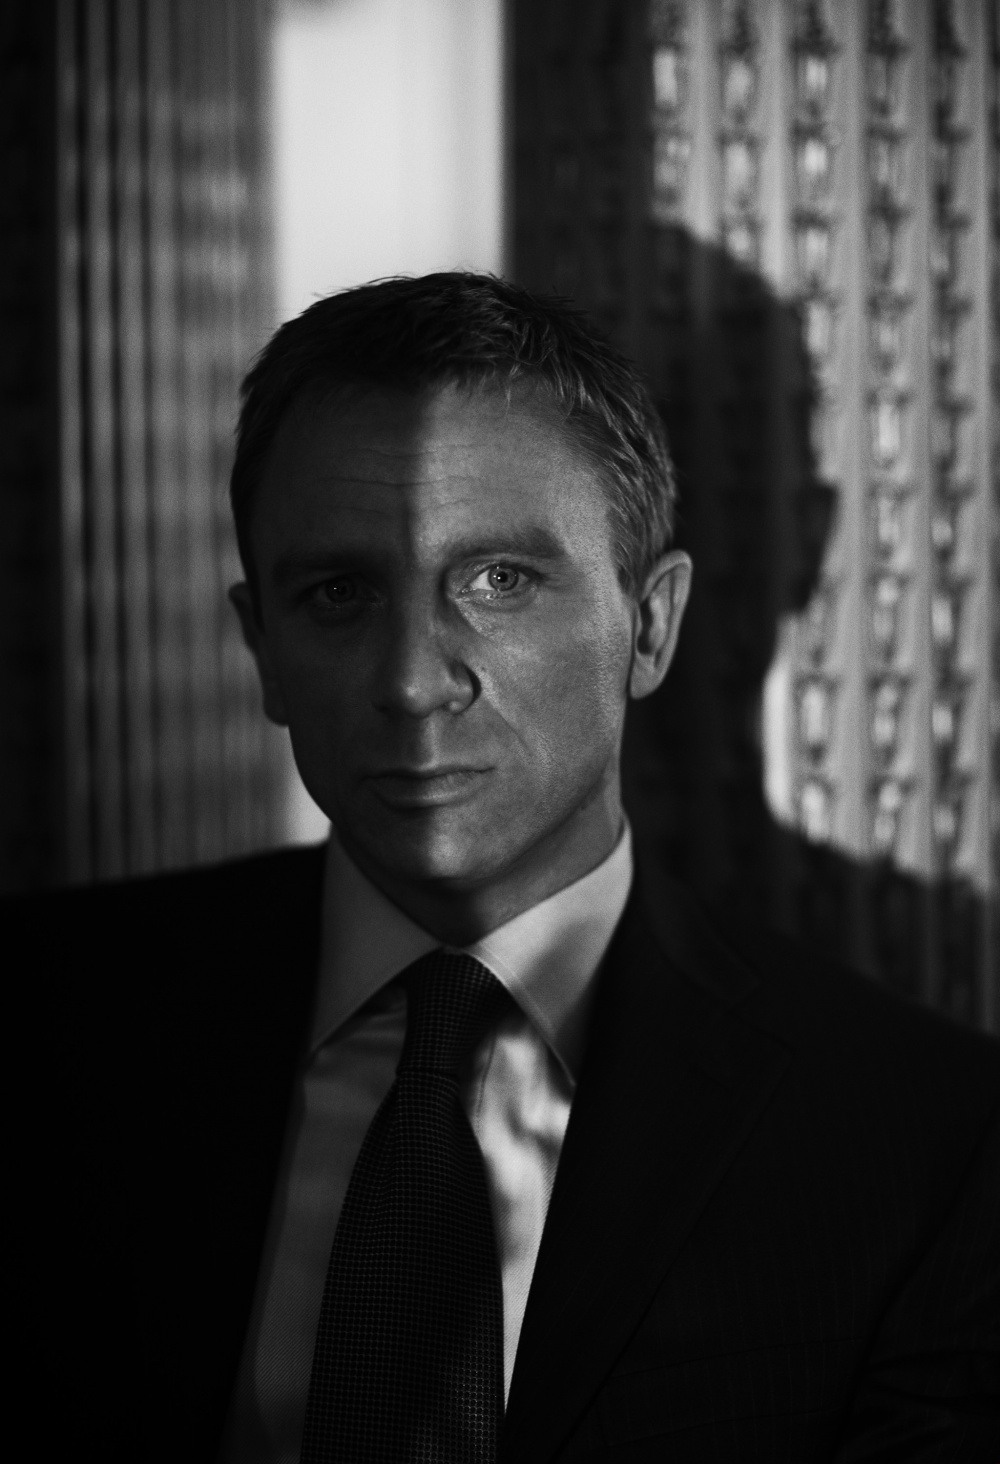 Daniel Craig photo 69 of 798 pics, wallpaper - photo #114205 - ThePlace2